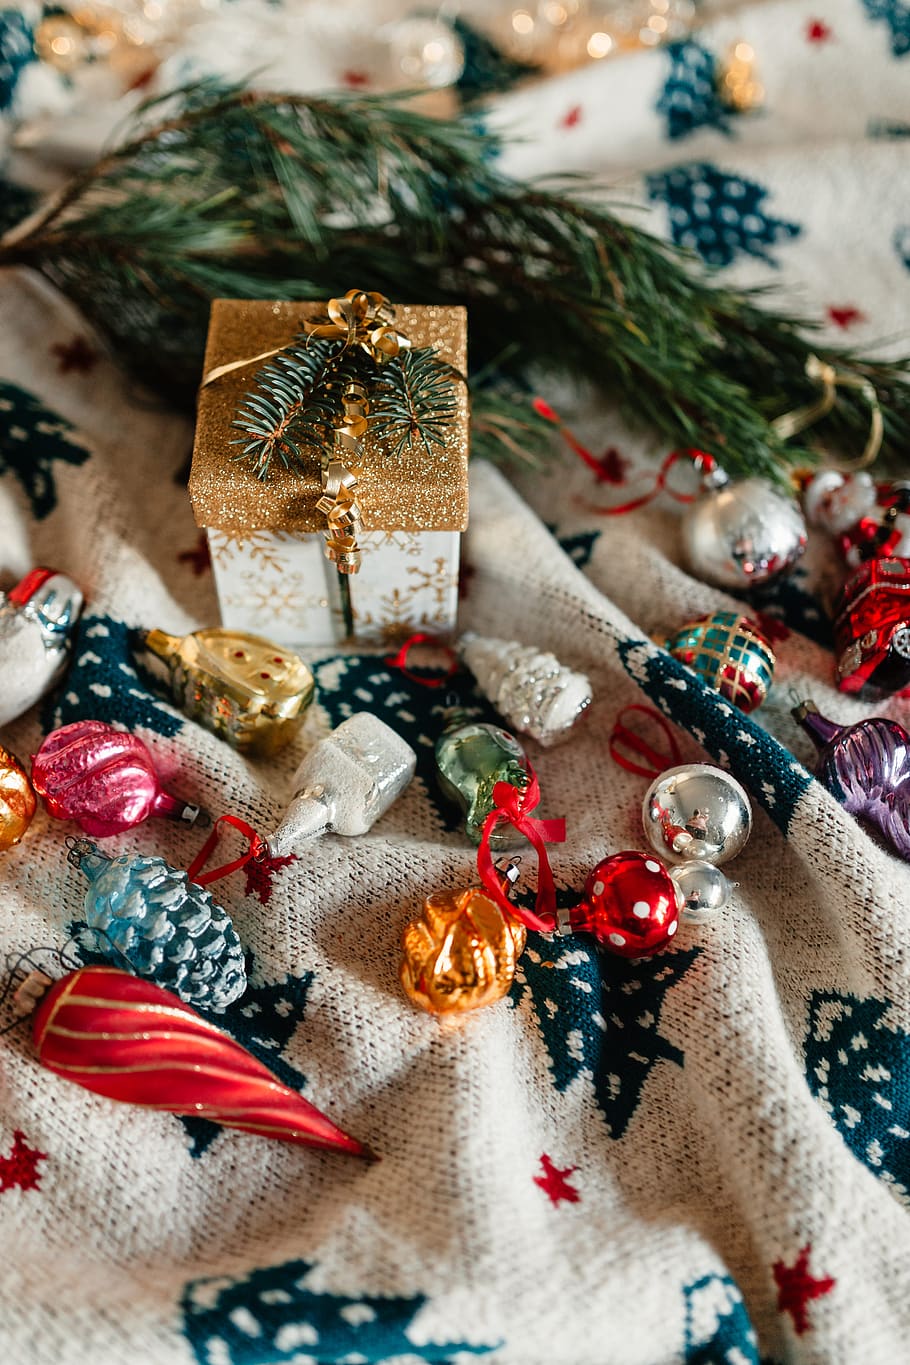 hadiah Natal, xmas, hadiah, menyajikan, bola pohon, bola Natal, dekorasi, dekorasi Natal, musim dingin, Desember